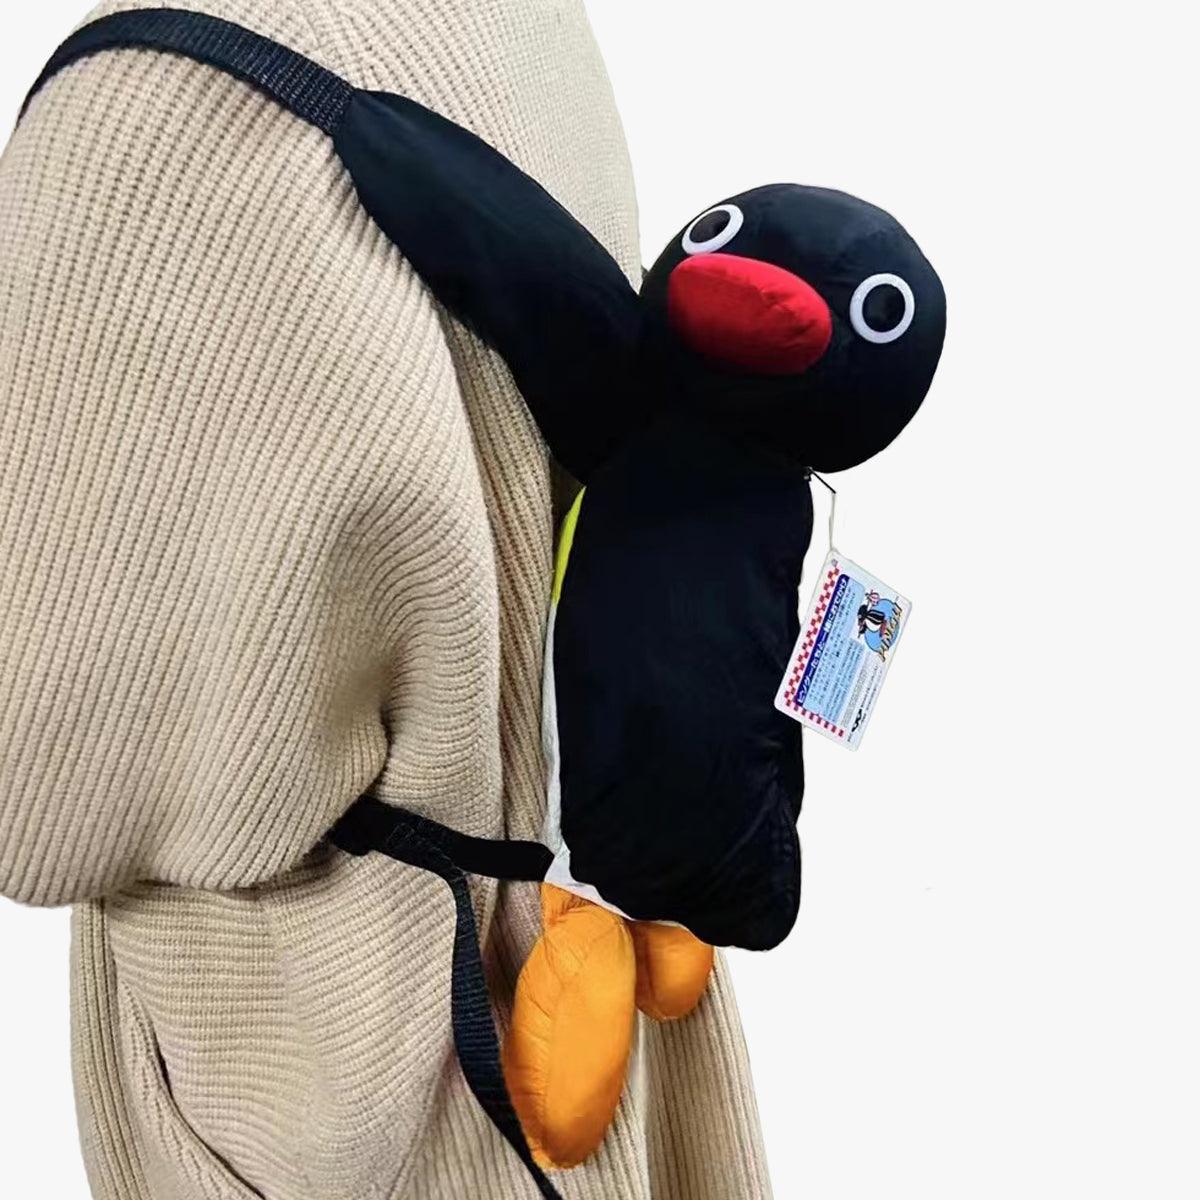 Cute Clothing Penguin Stuffed Animal Plush Toys